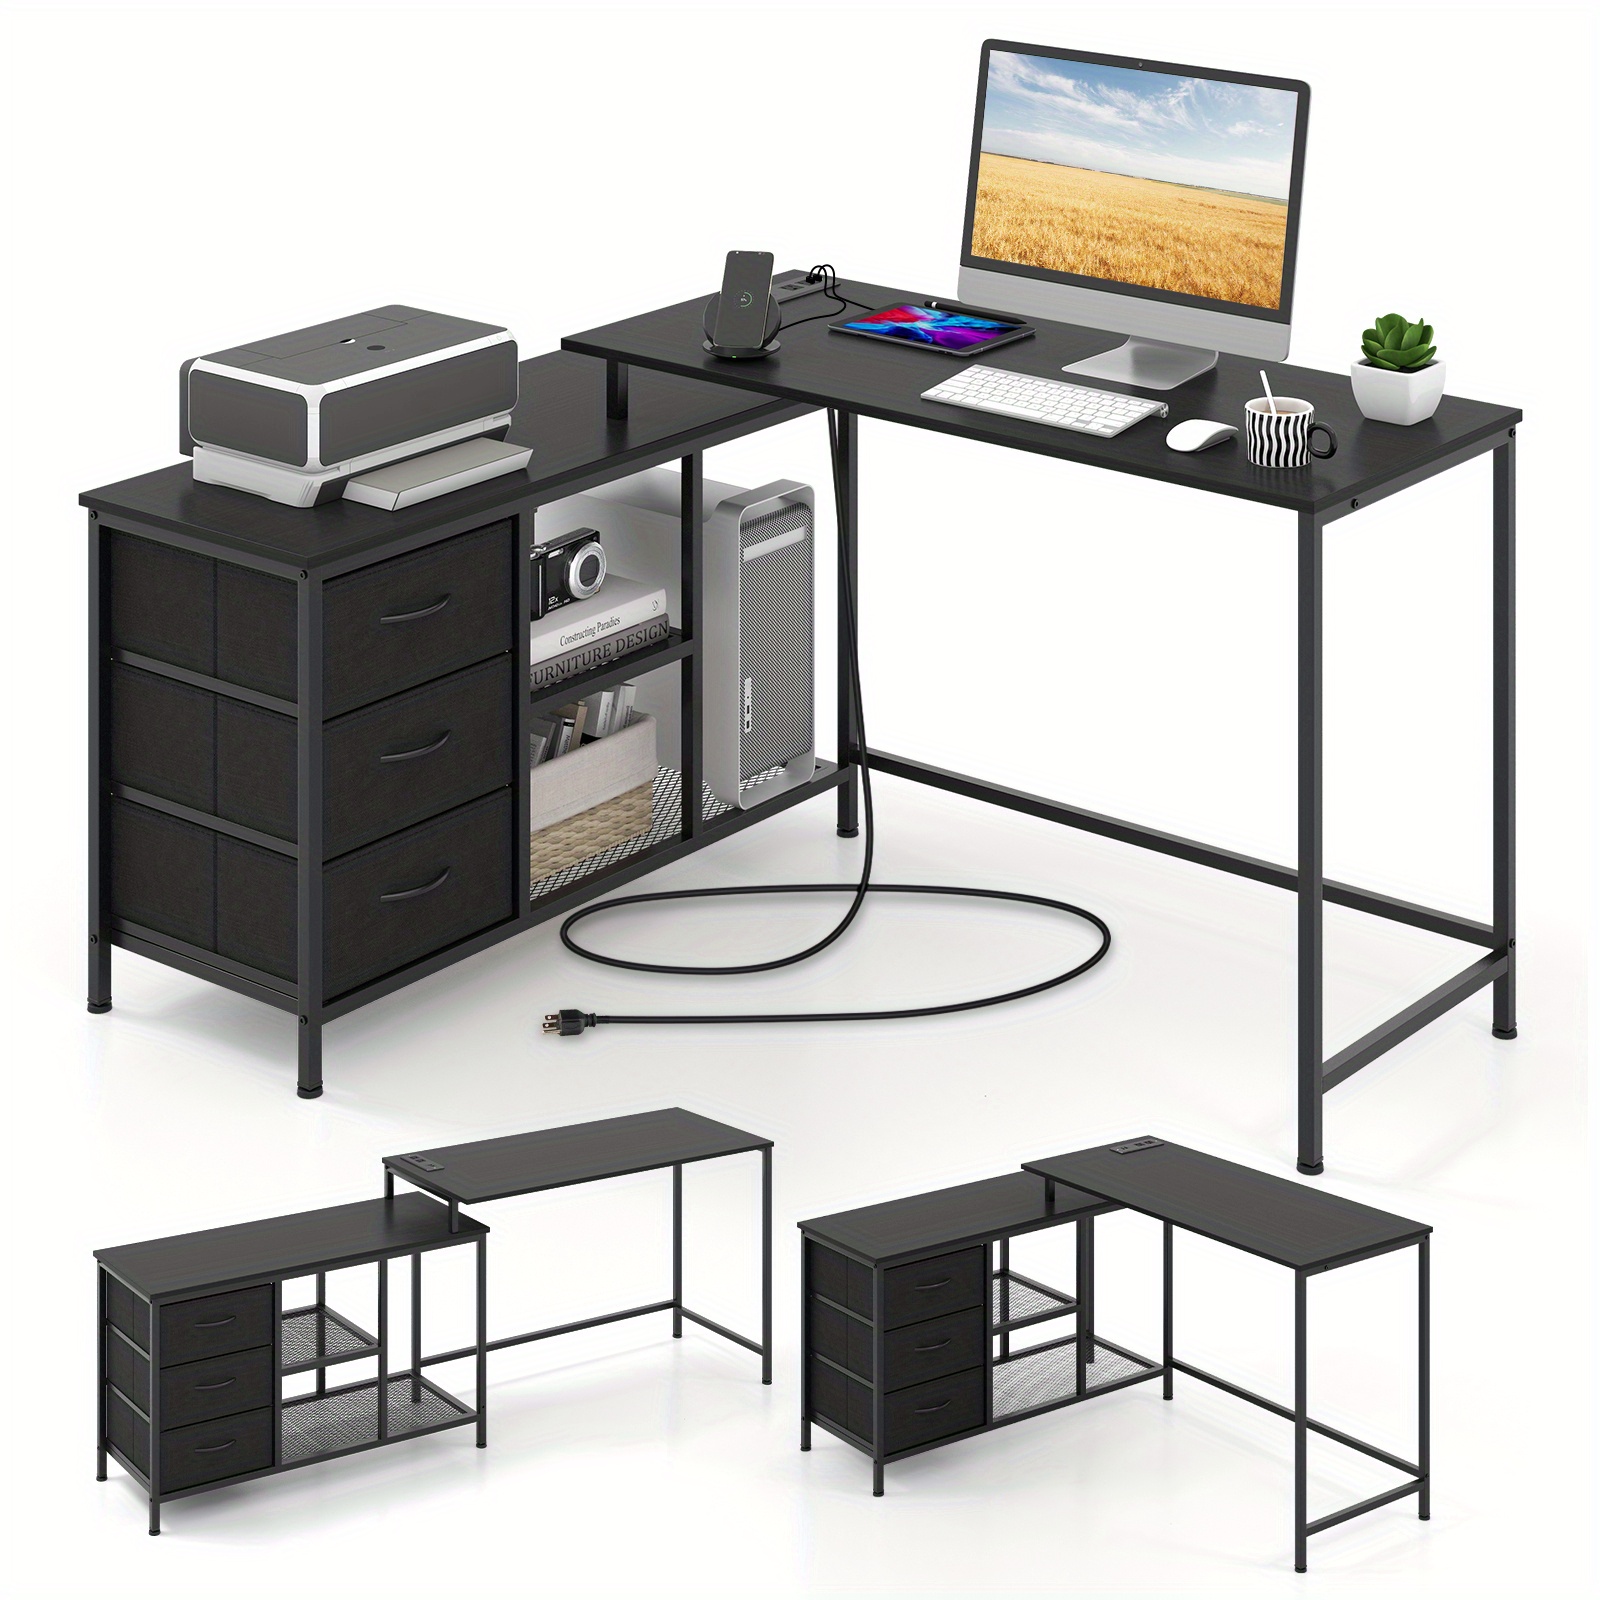 

Lifezeal L-shaped Computer Desk W/ Power Outlet, Fabric Drawers, Metal Mesh Shelves Black